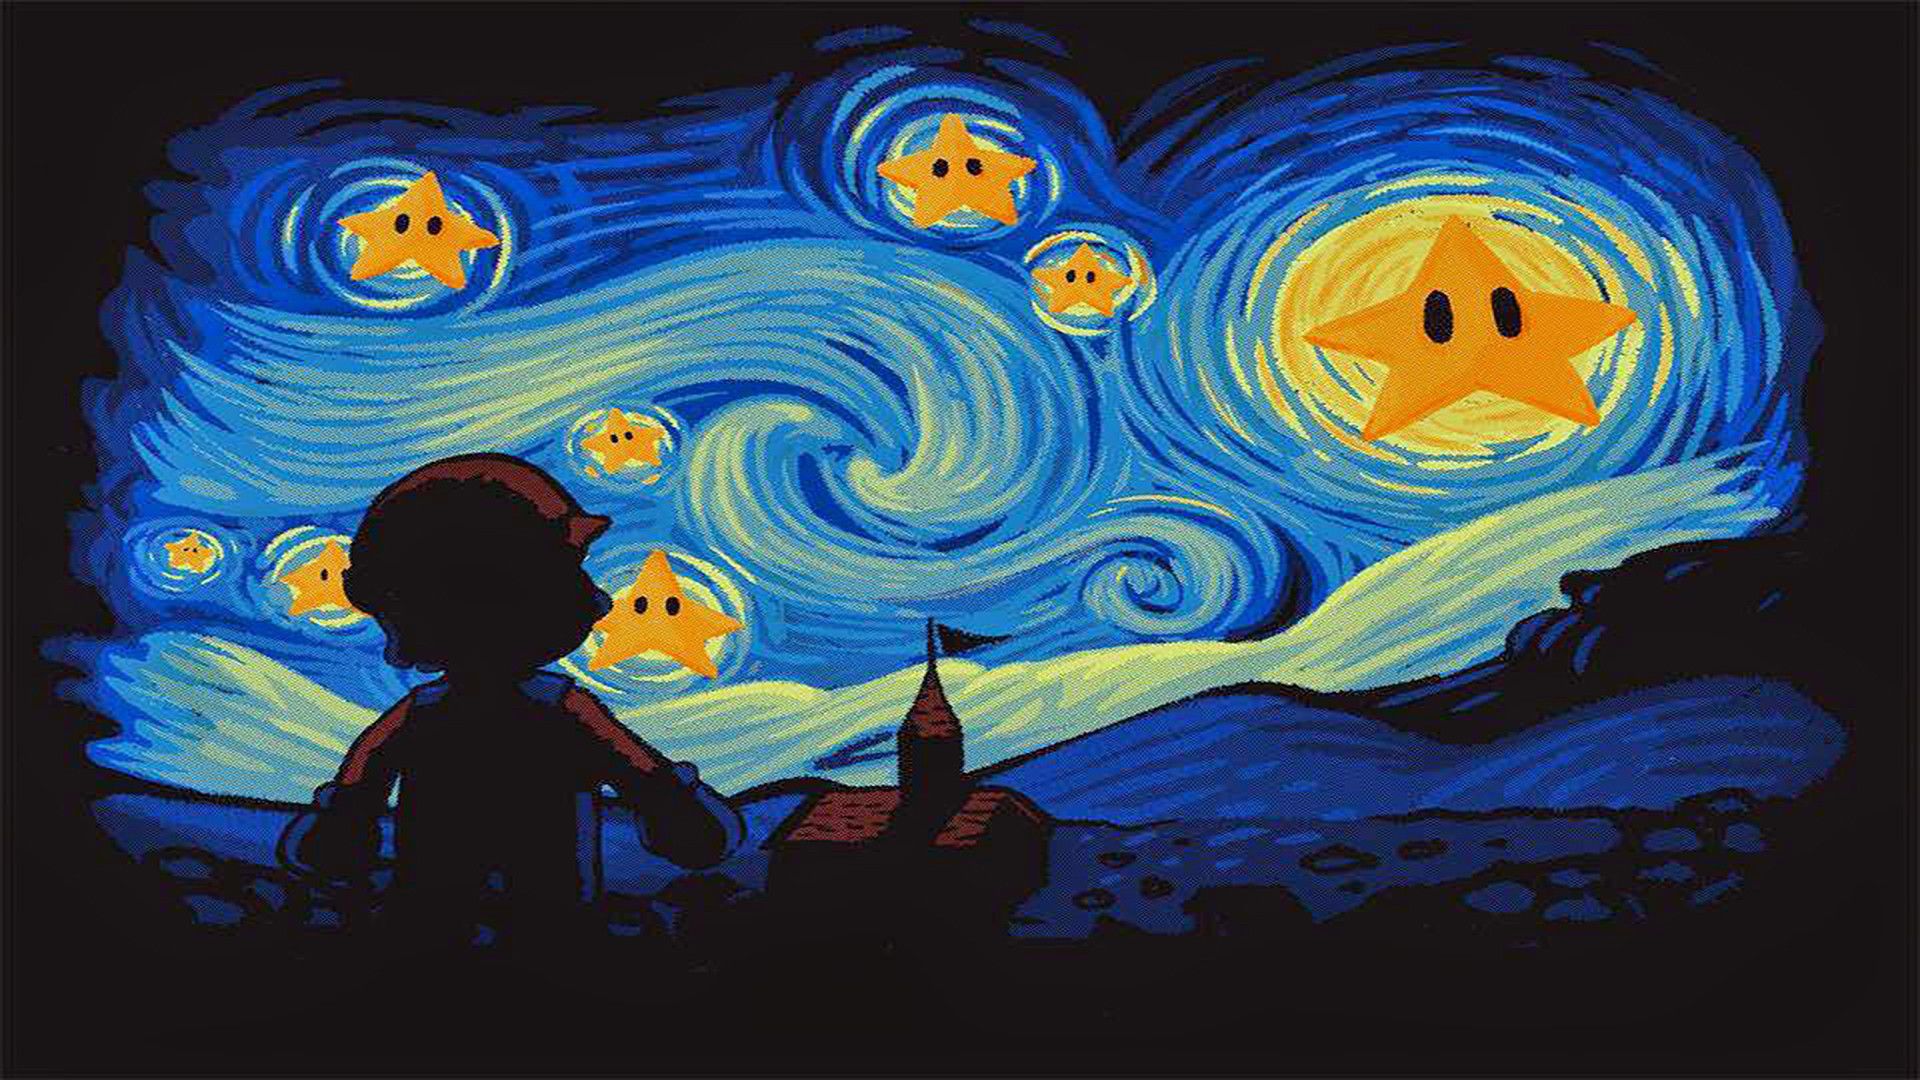 Mario Starry Night (1920x1080) : wallpaper